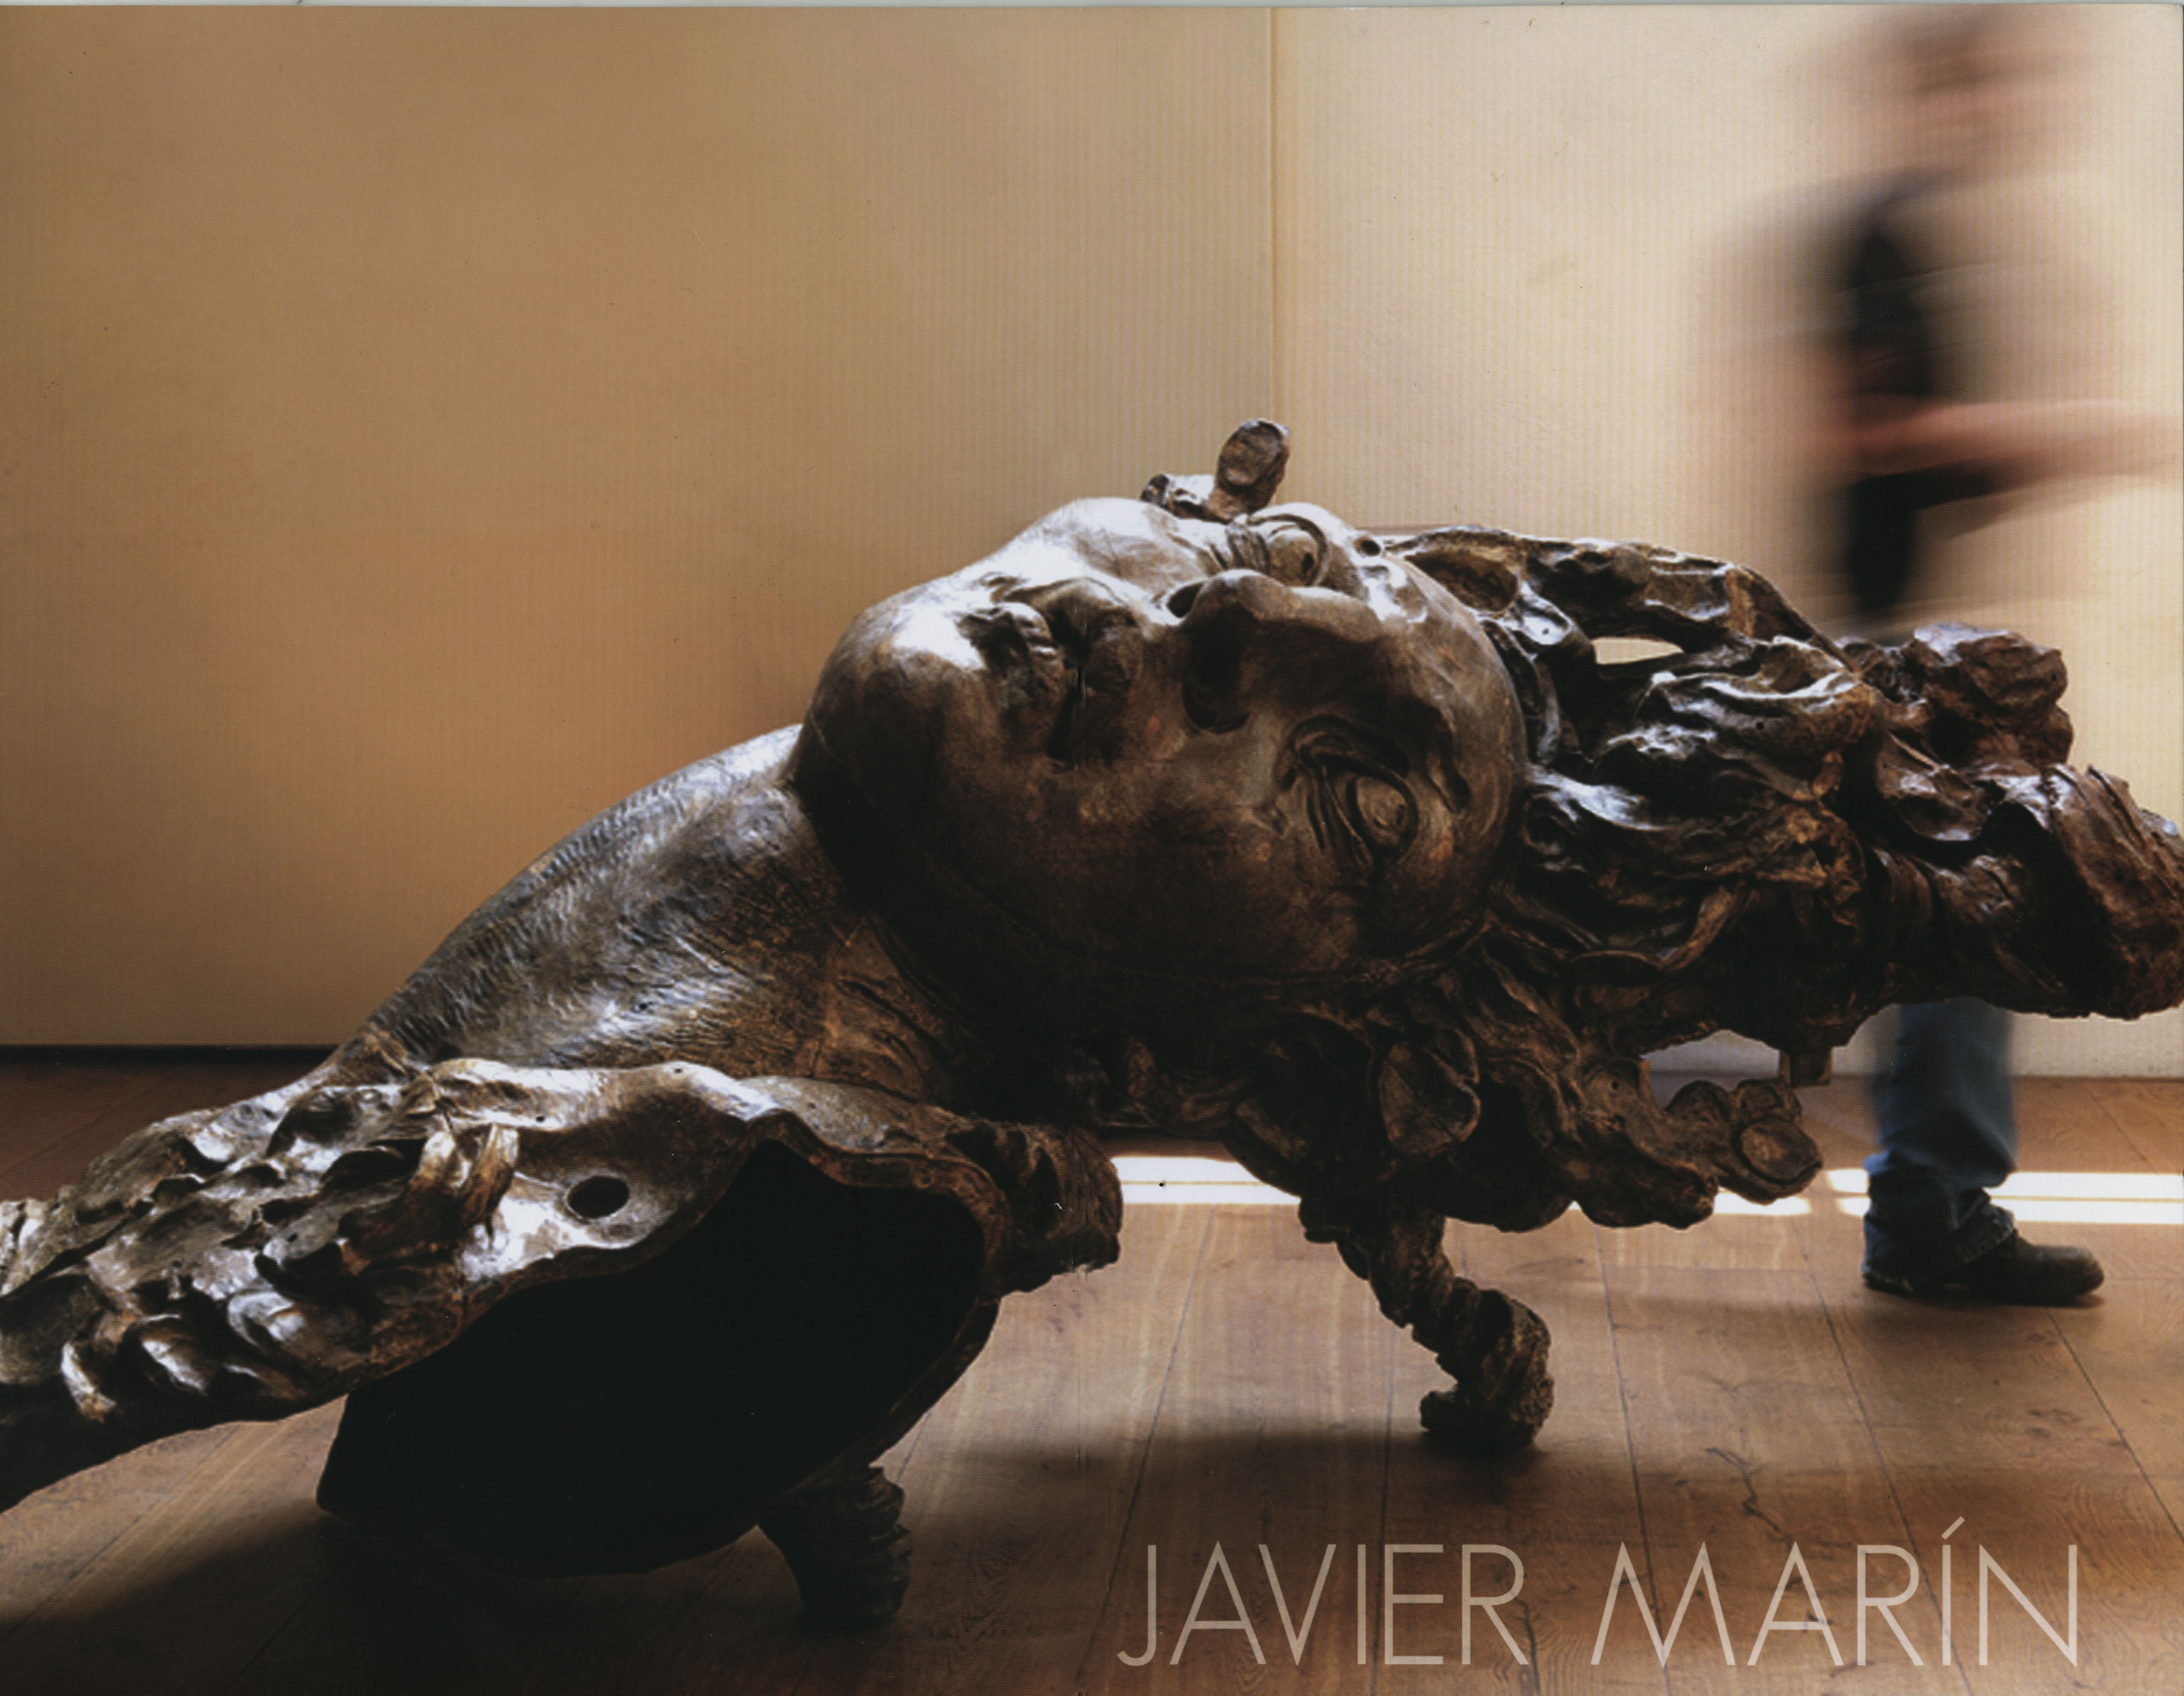 Javier Marín: Recent Sculptures